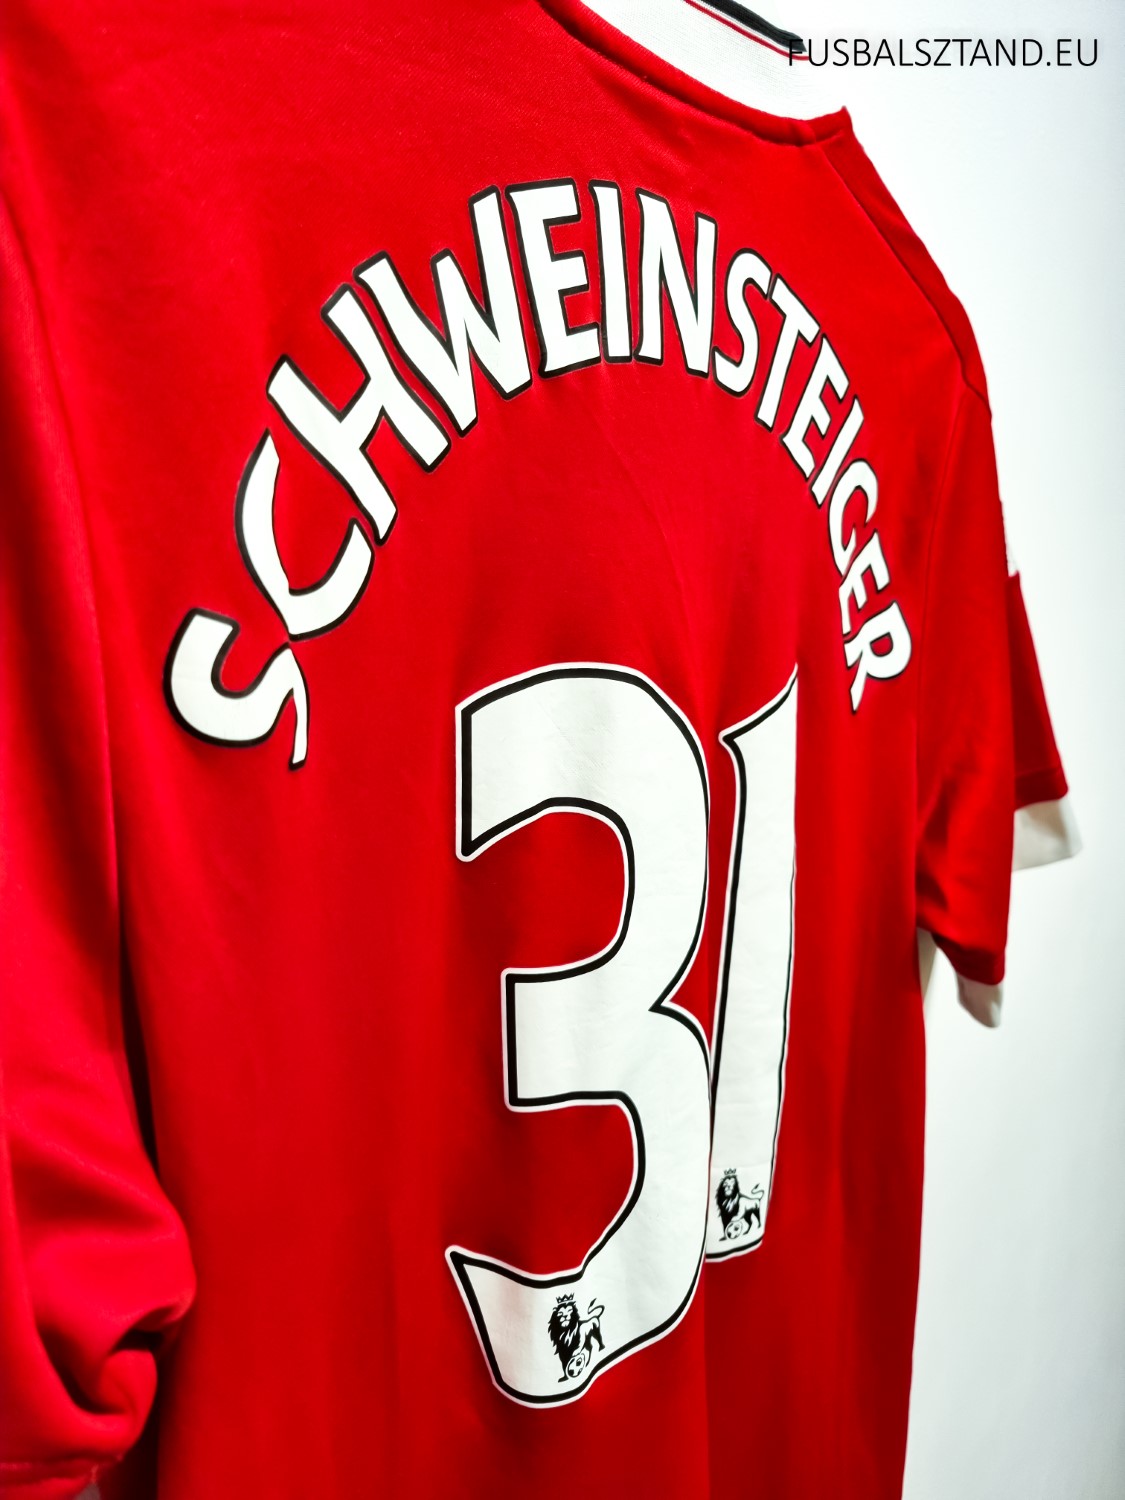 Manchester United Home M 2015/16 Bastian Schweinsteiger AC1415